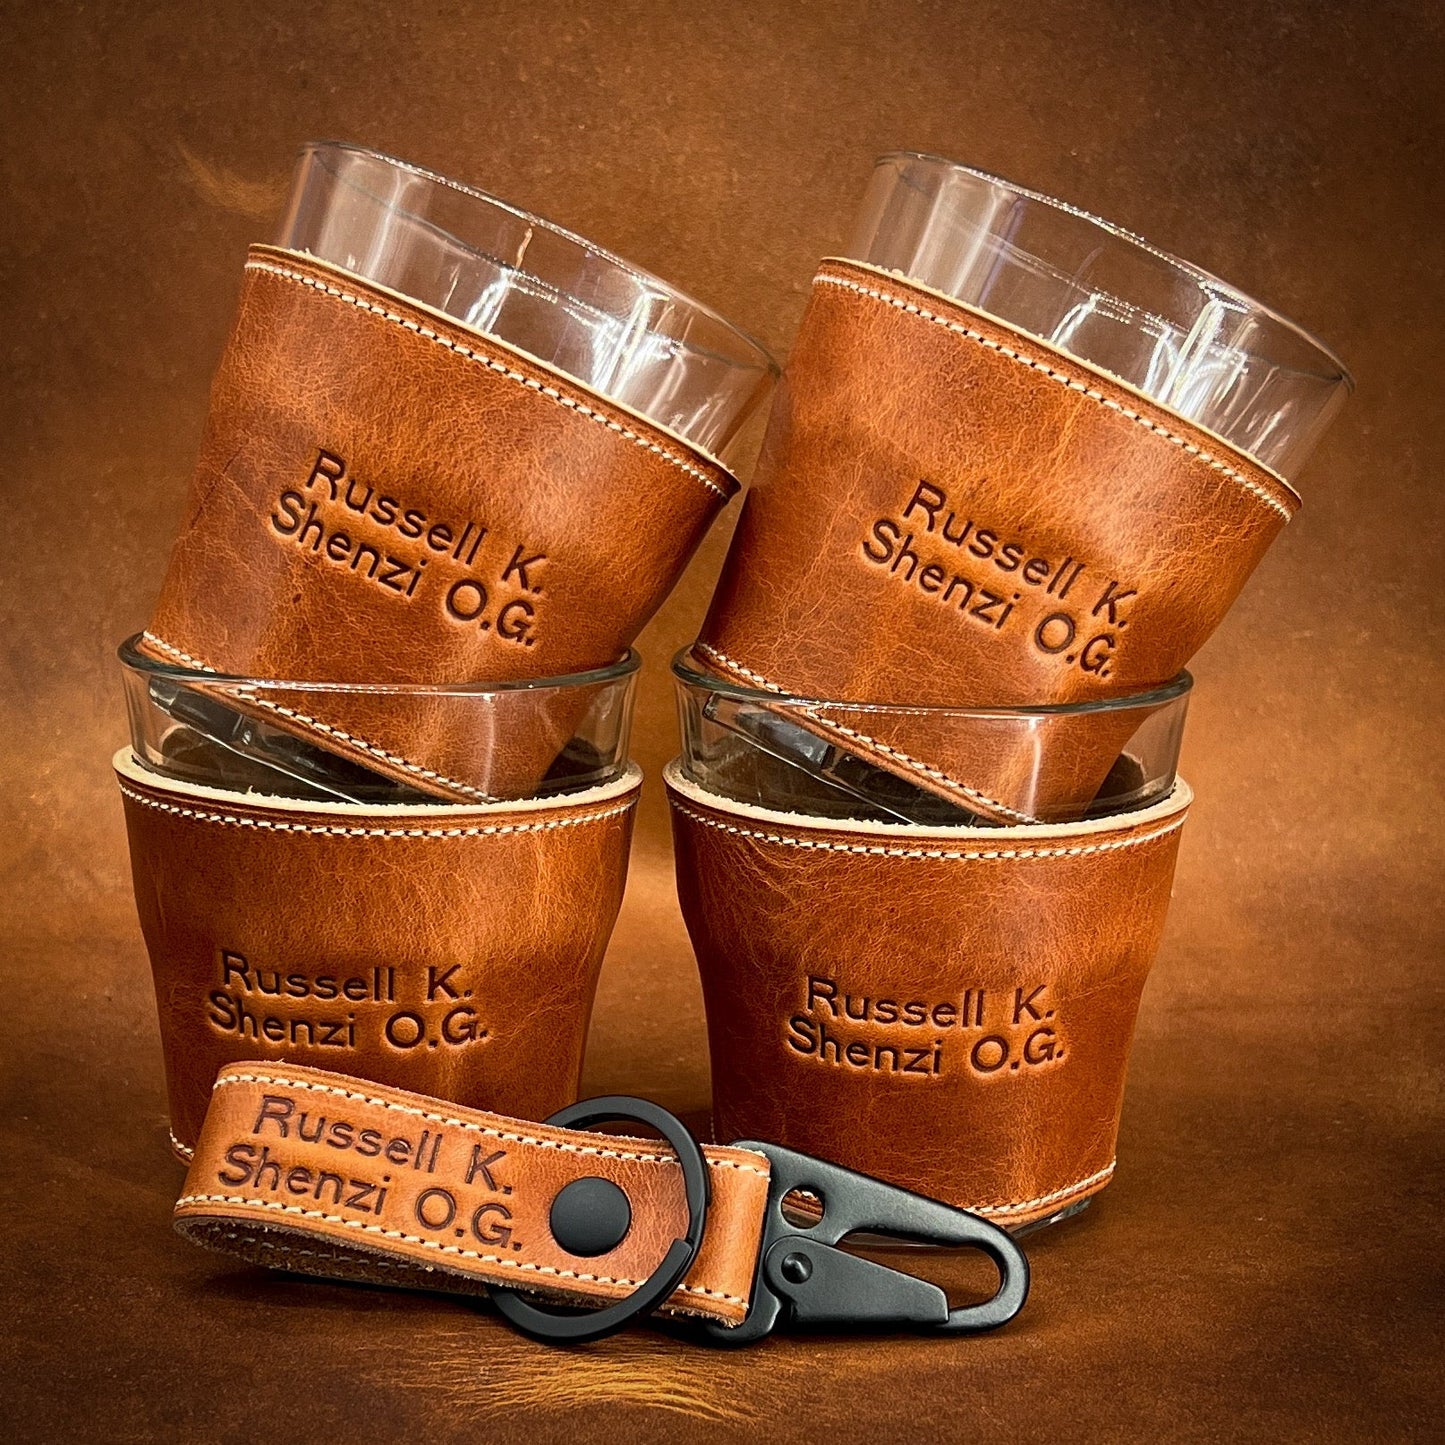 Engraved Rocks Glasses for Corporate Giving.  Handmade to Order in Houston TX